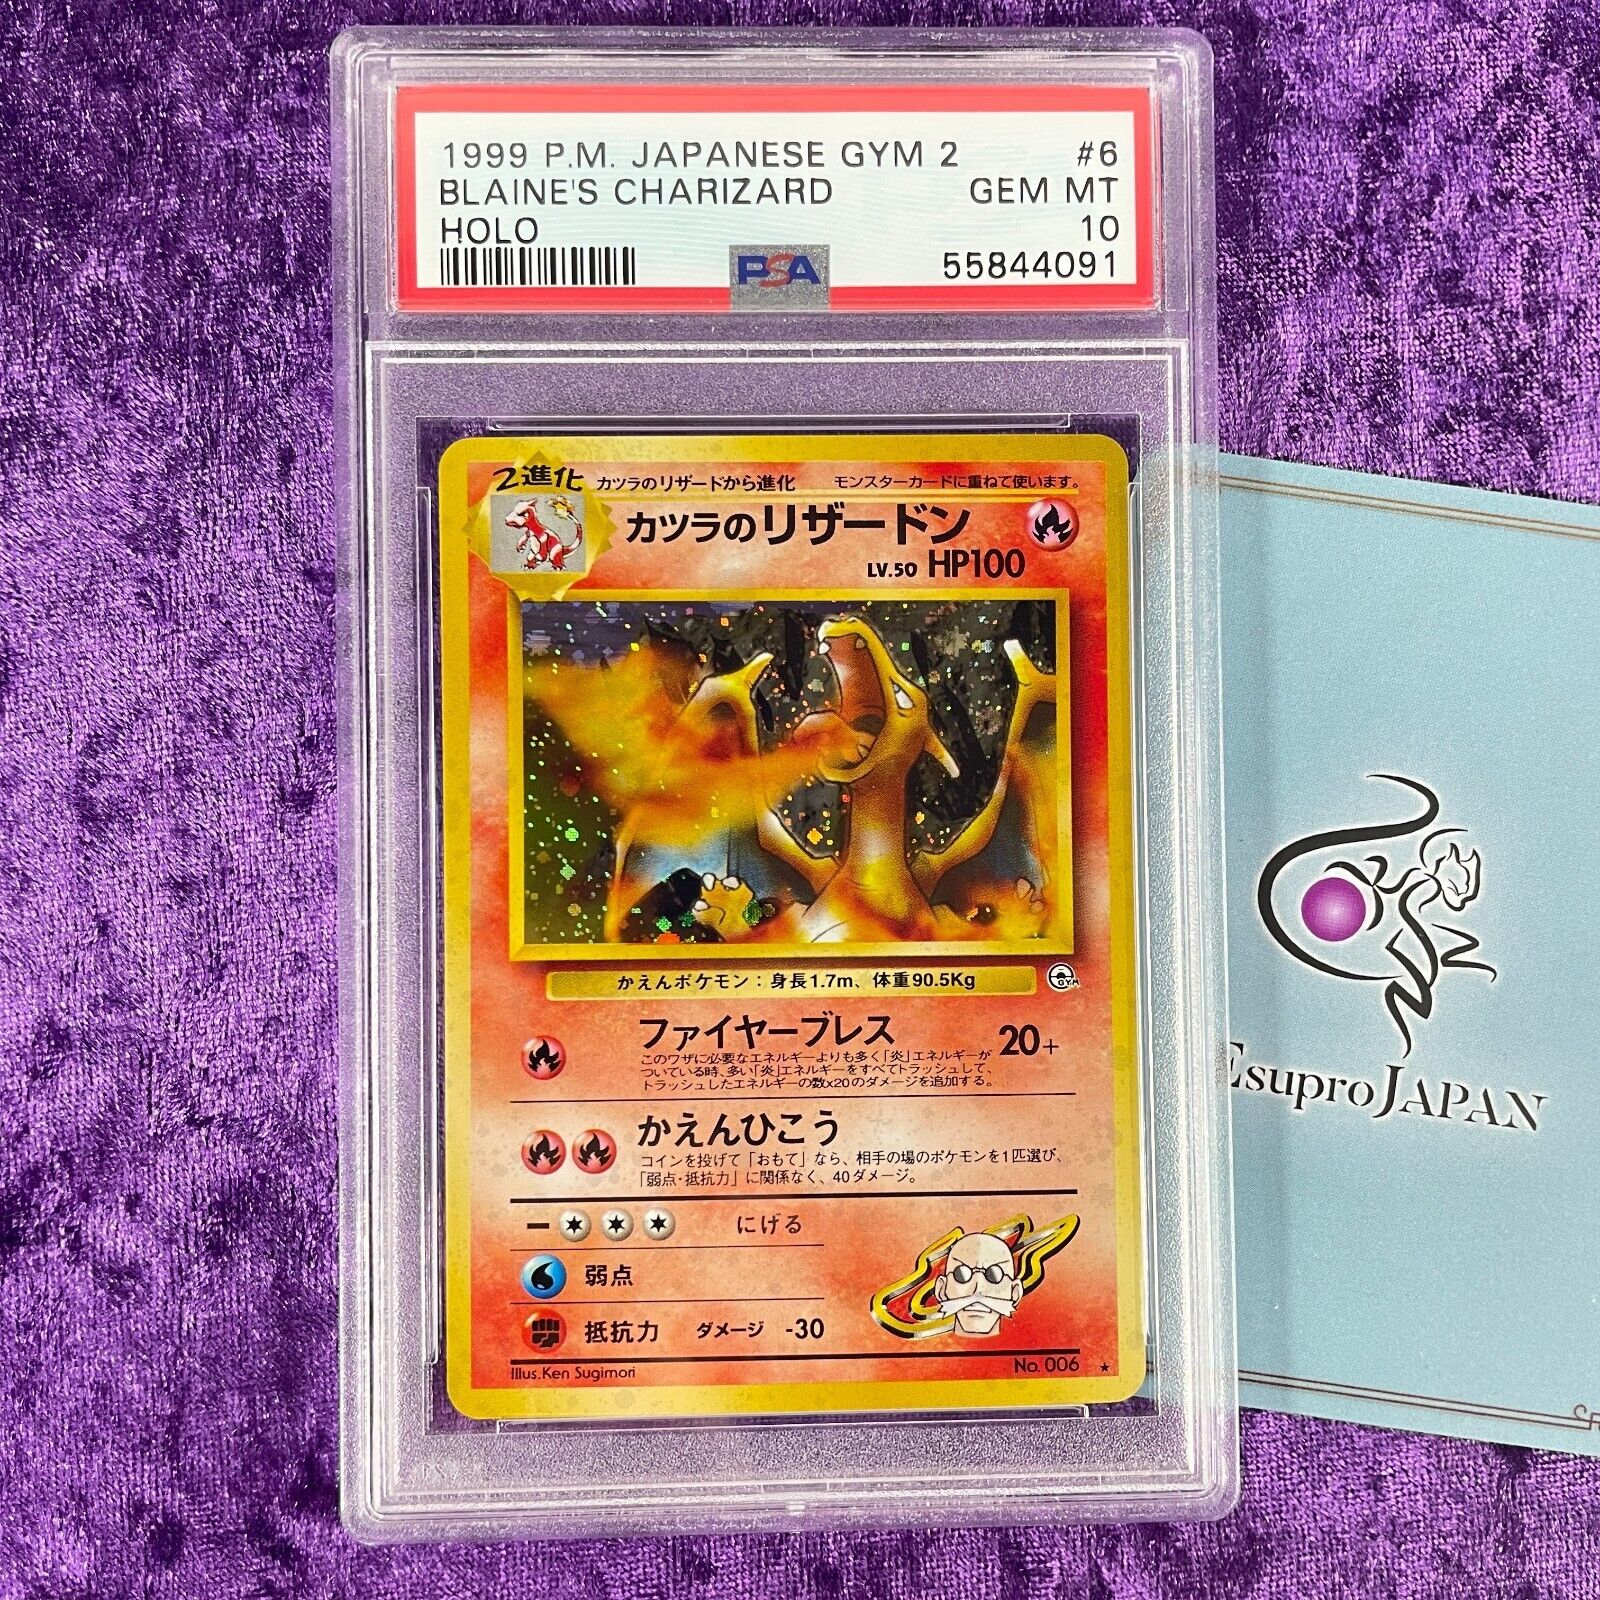 PSA 10 1999 Blaine's Charizard Holo #006 Pokemon Japanese GYM 2 Gem Mint Vintage